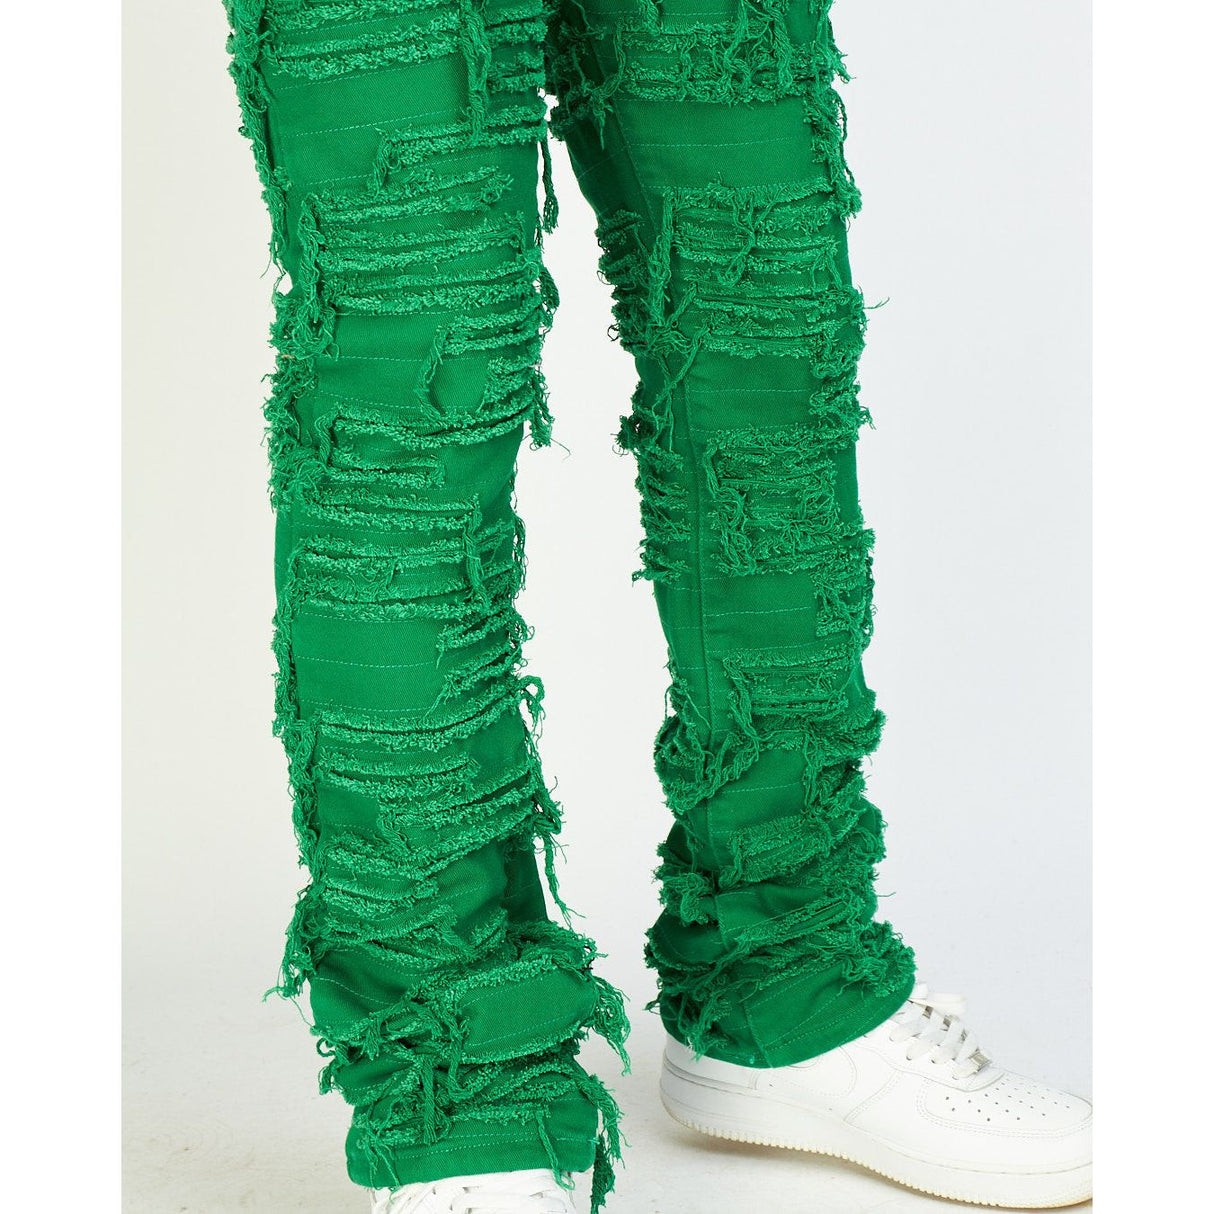 Politics Jeans - Thrashed Distressed Denim  - Green - Debris 506